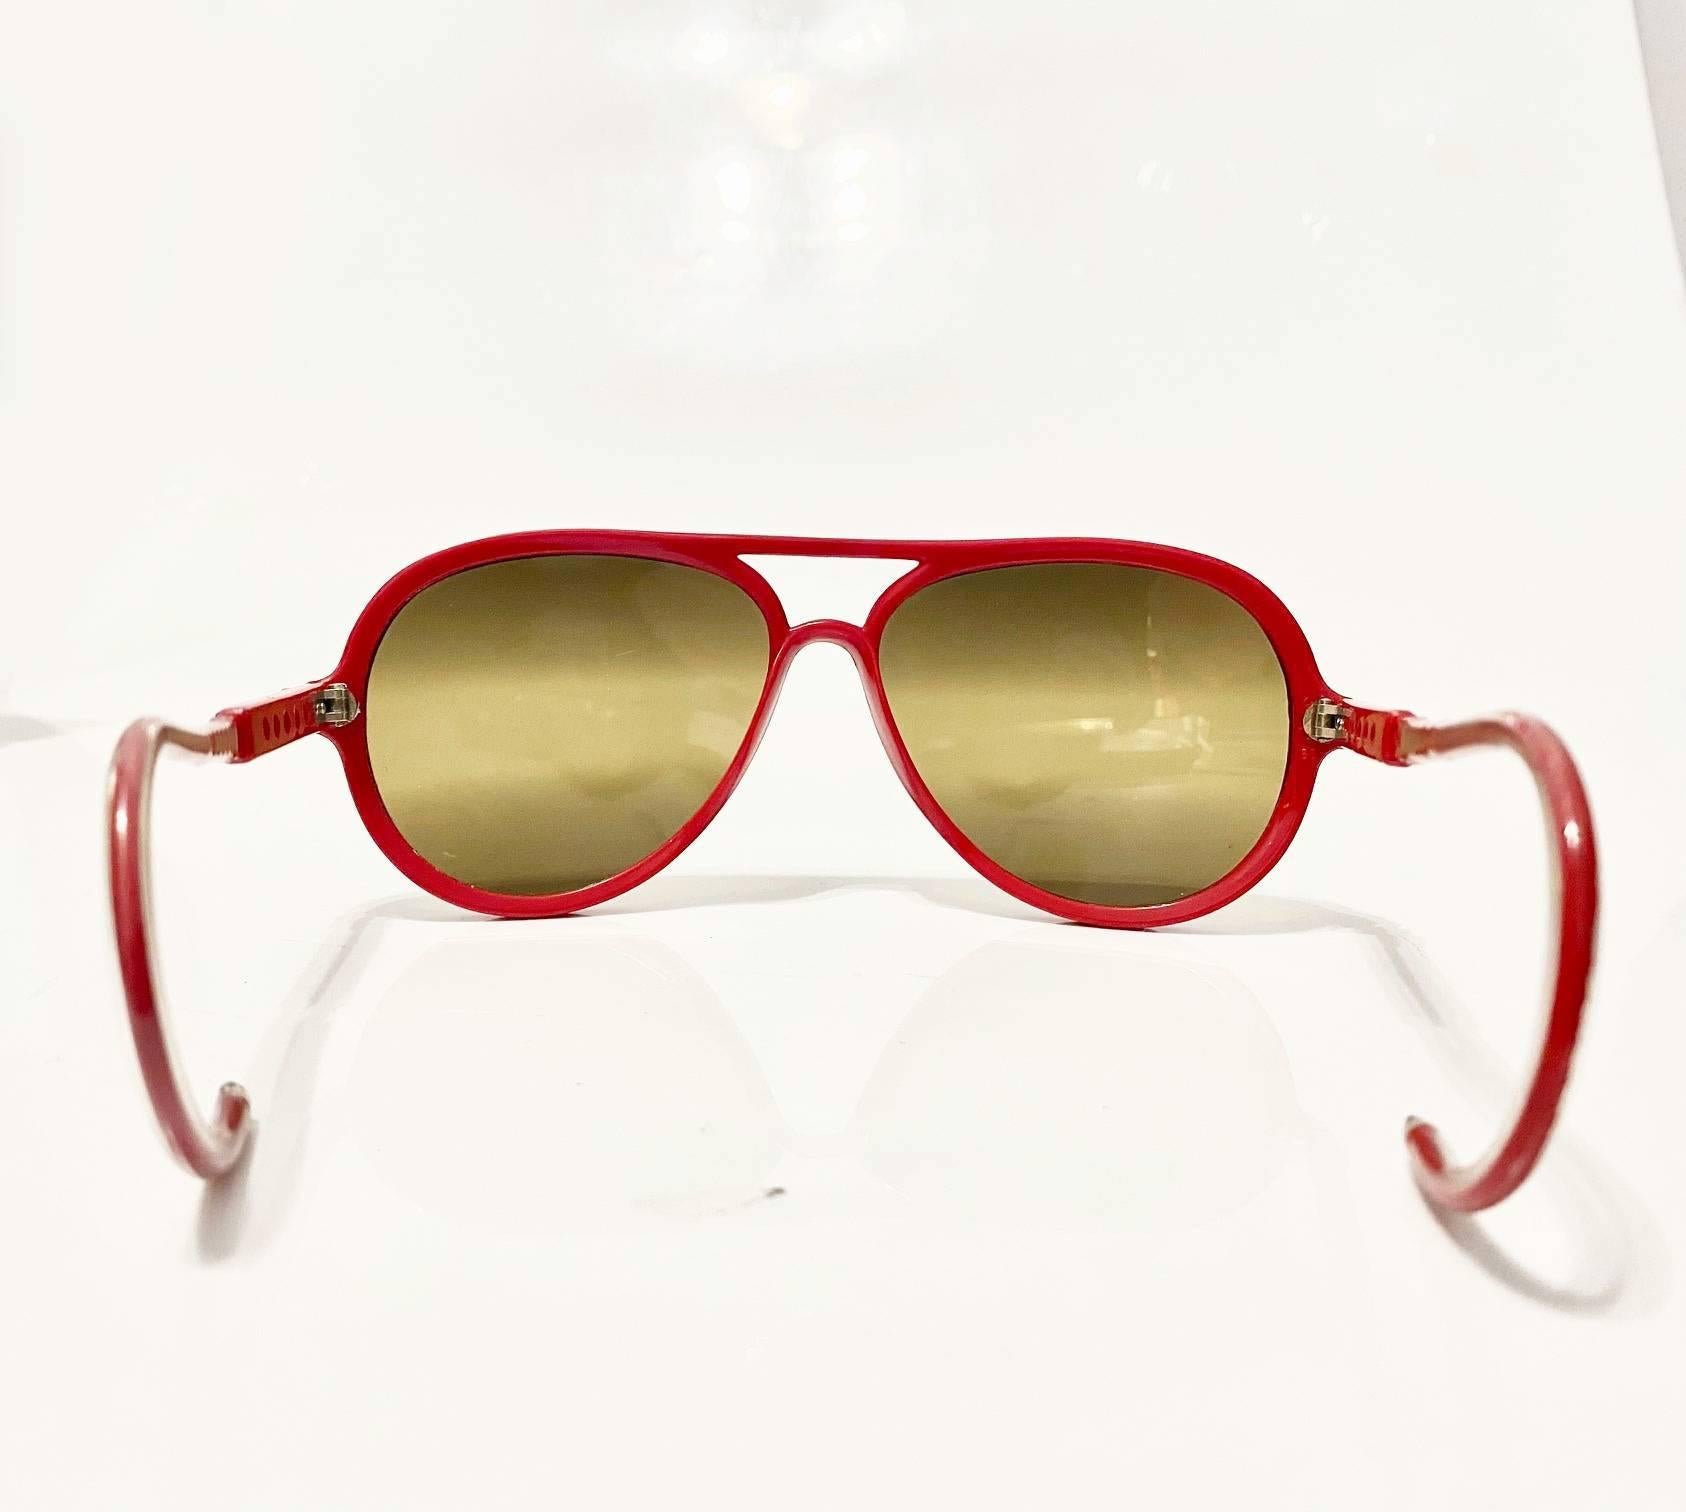  1980s Rossignol Mirrored Ski Red Adjustable Sunglasses 2